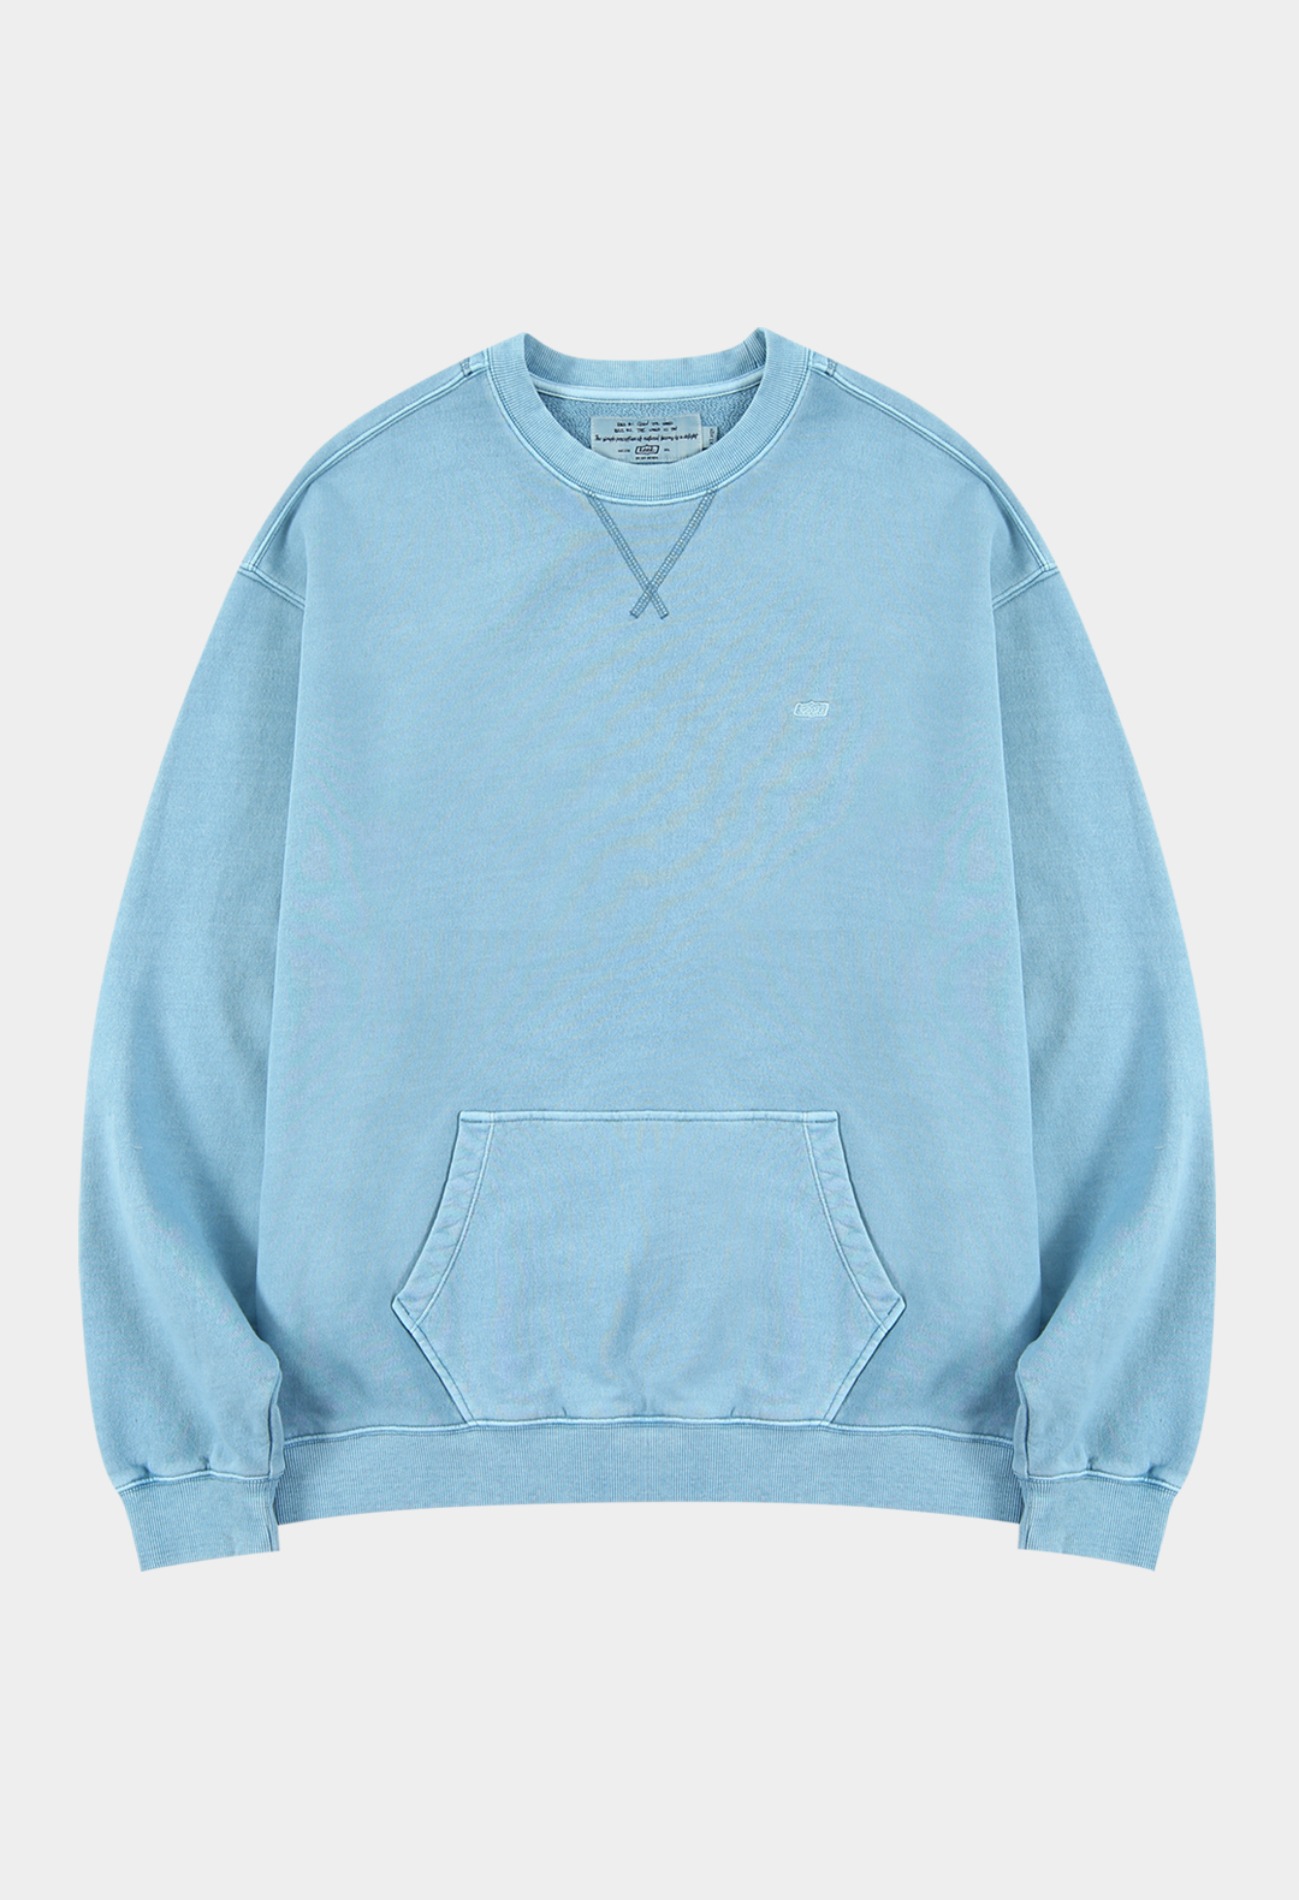 keek Washing pocket sweatshirts - Vintage blue 스트릿패션 유니섹스브랜드 커플시밀러룩 남자쇼핑몰 여성의류쇼핑몰 후드티 힙색